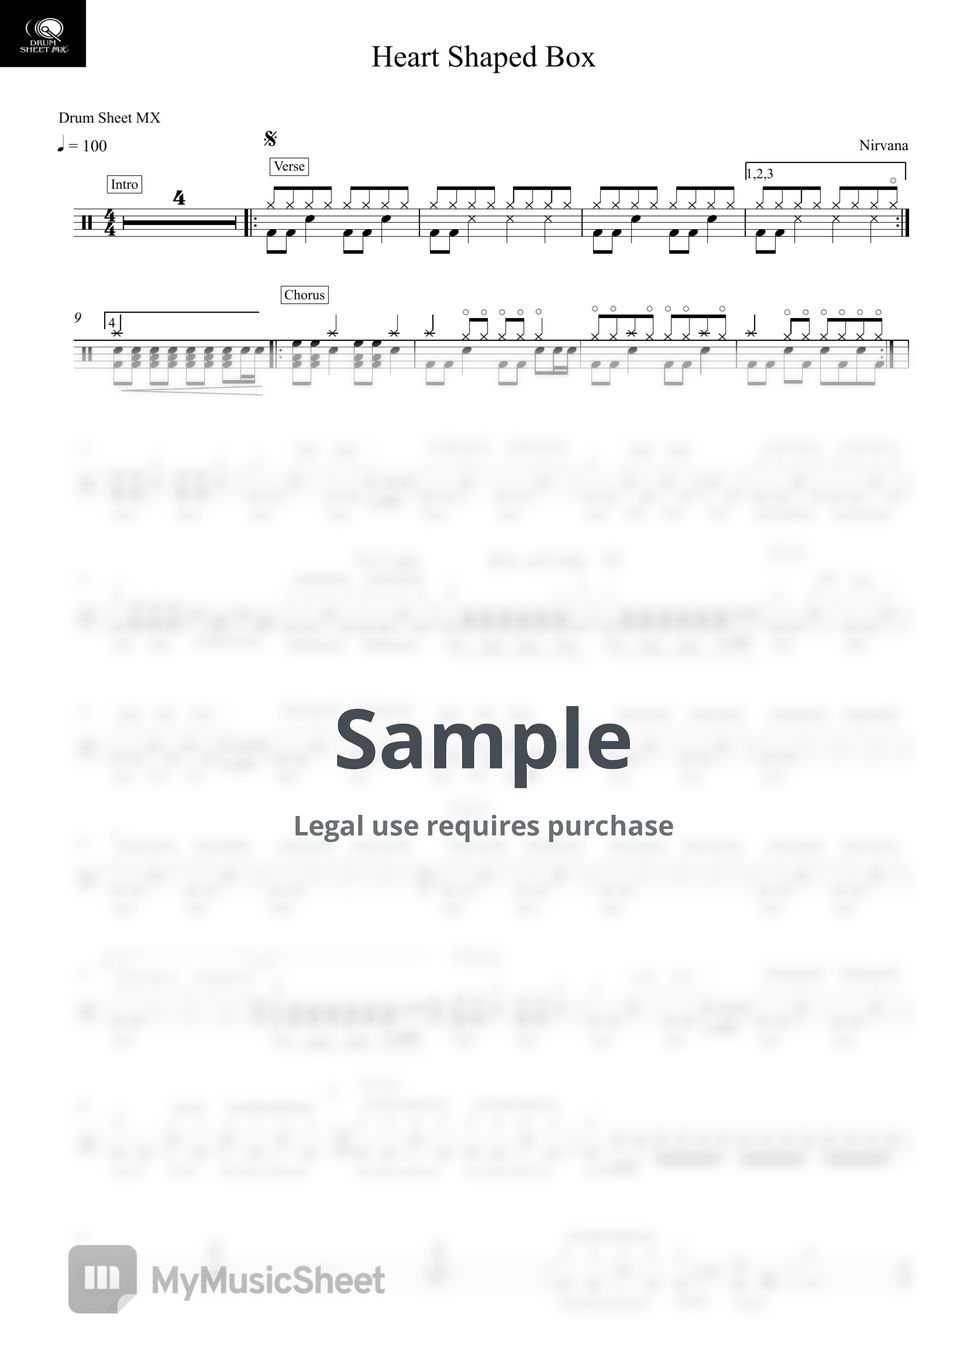 Nirvana - Heart Shaped Box by Drum Transcription: Drum Sheet MX